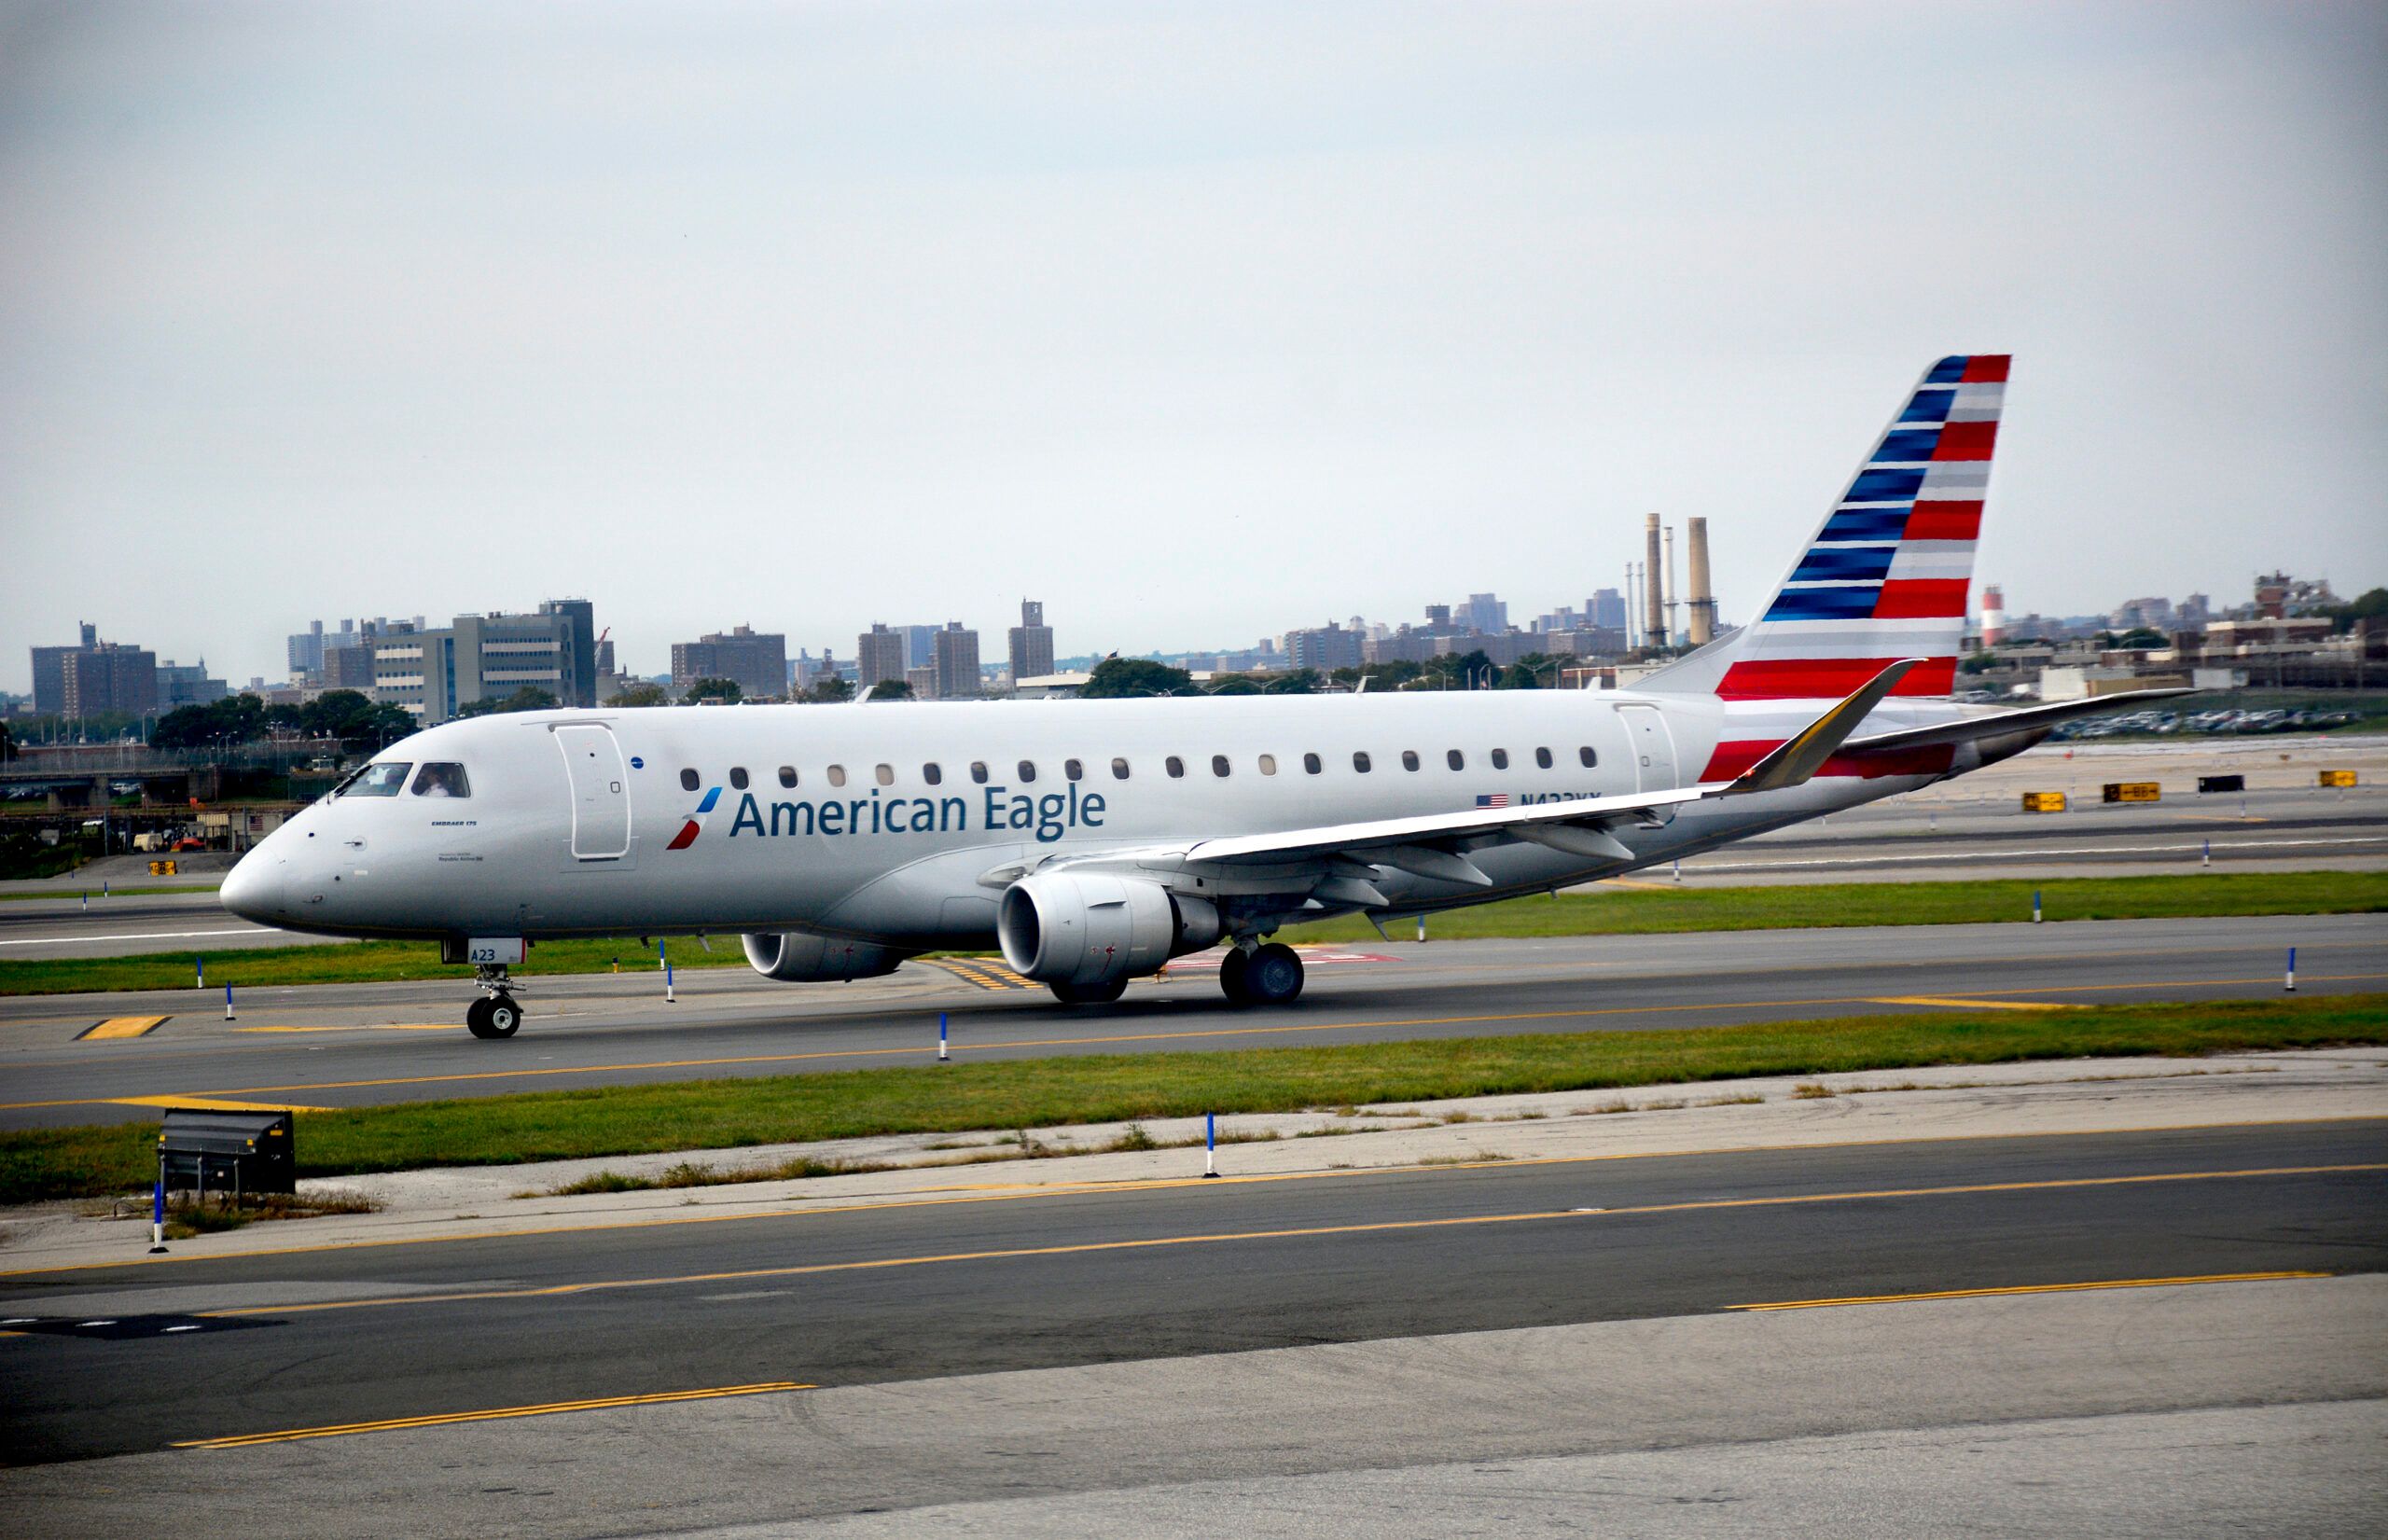 American Eagle E175 taxiing at LaGuardia Airport